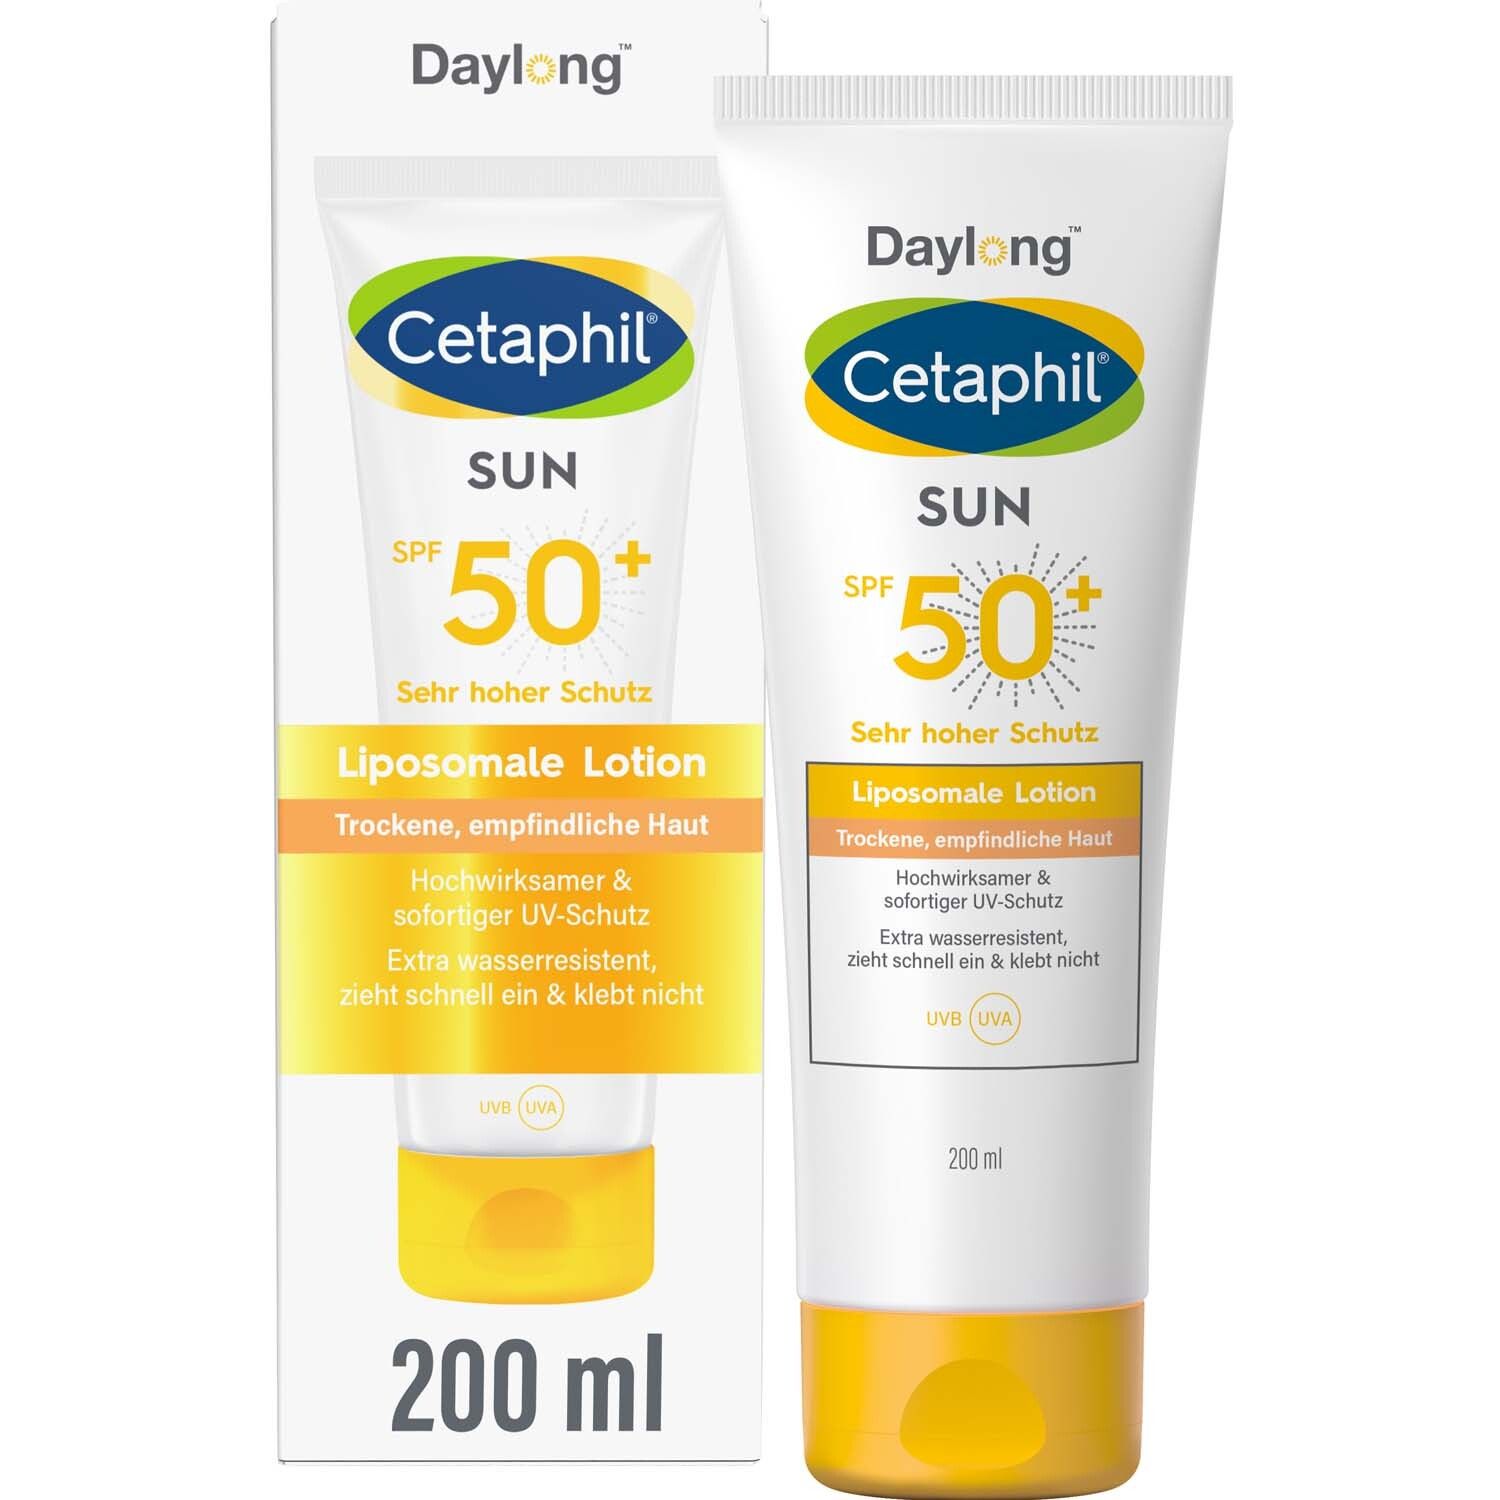 CETAPHIL SUN Liposomale Lotion SPF 50+ Feuchtigkeitsspendende Sonnenschutzlotion